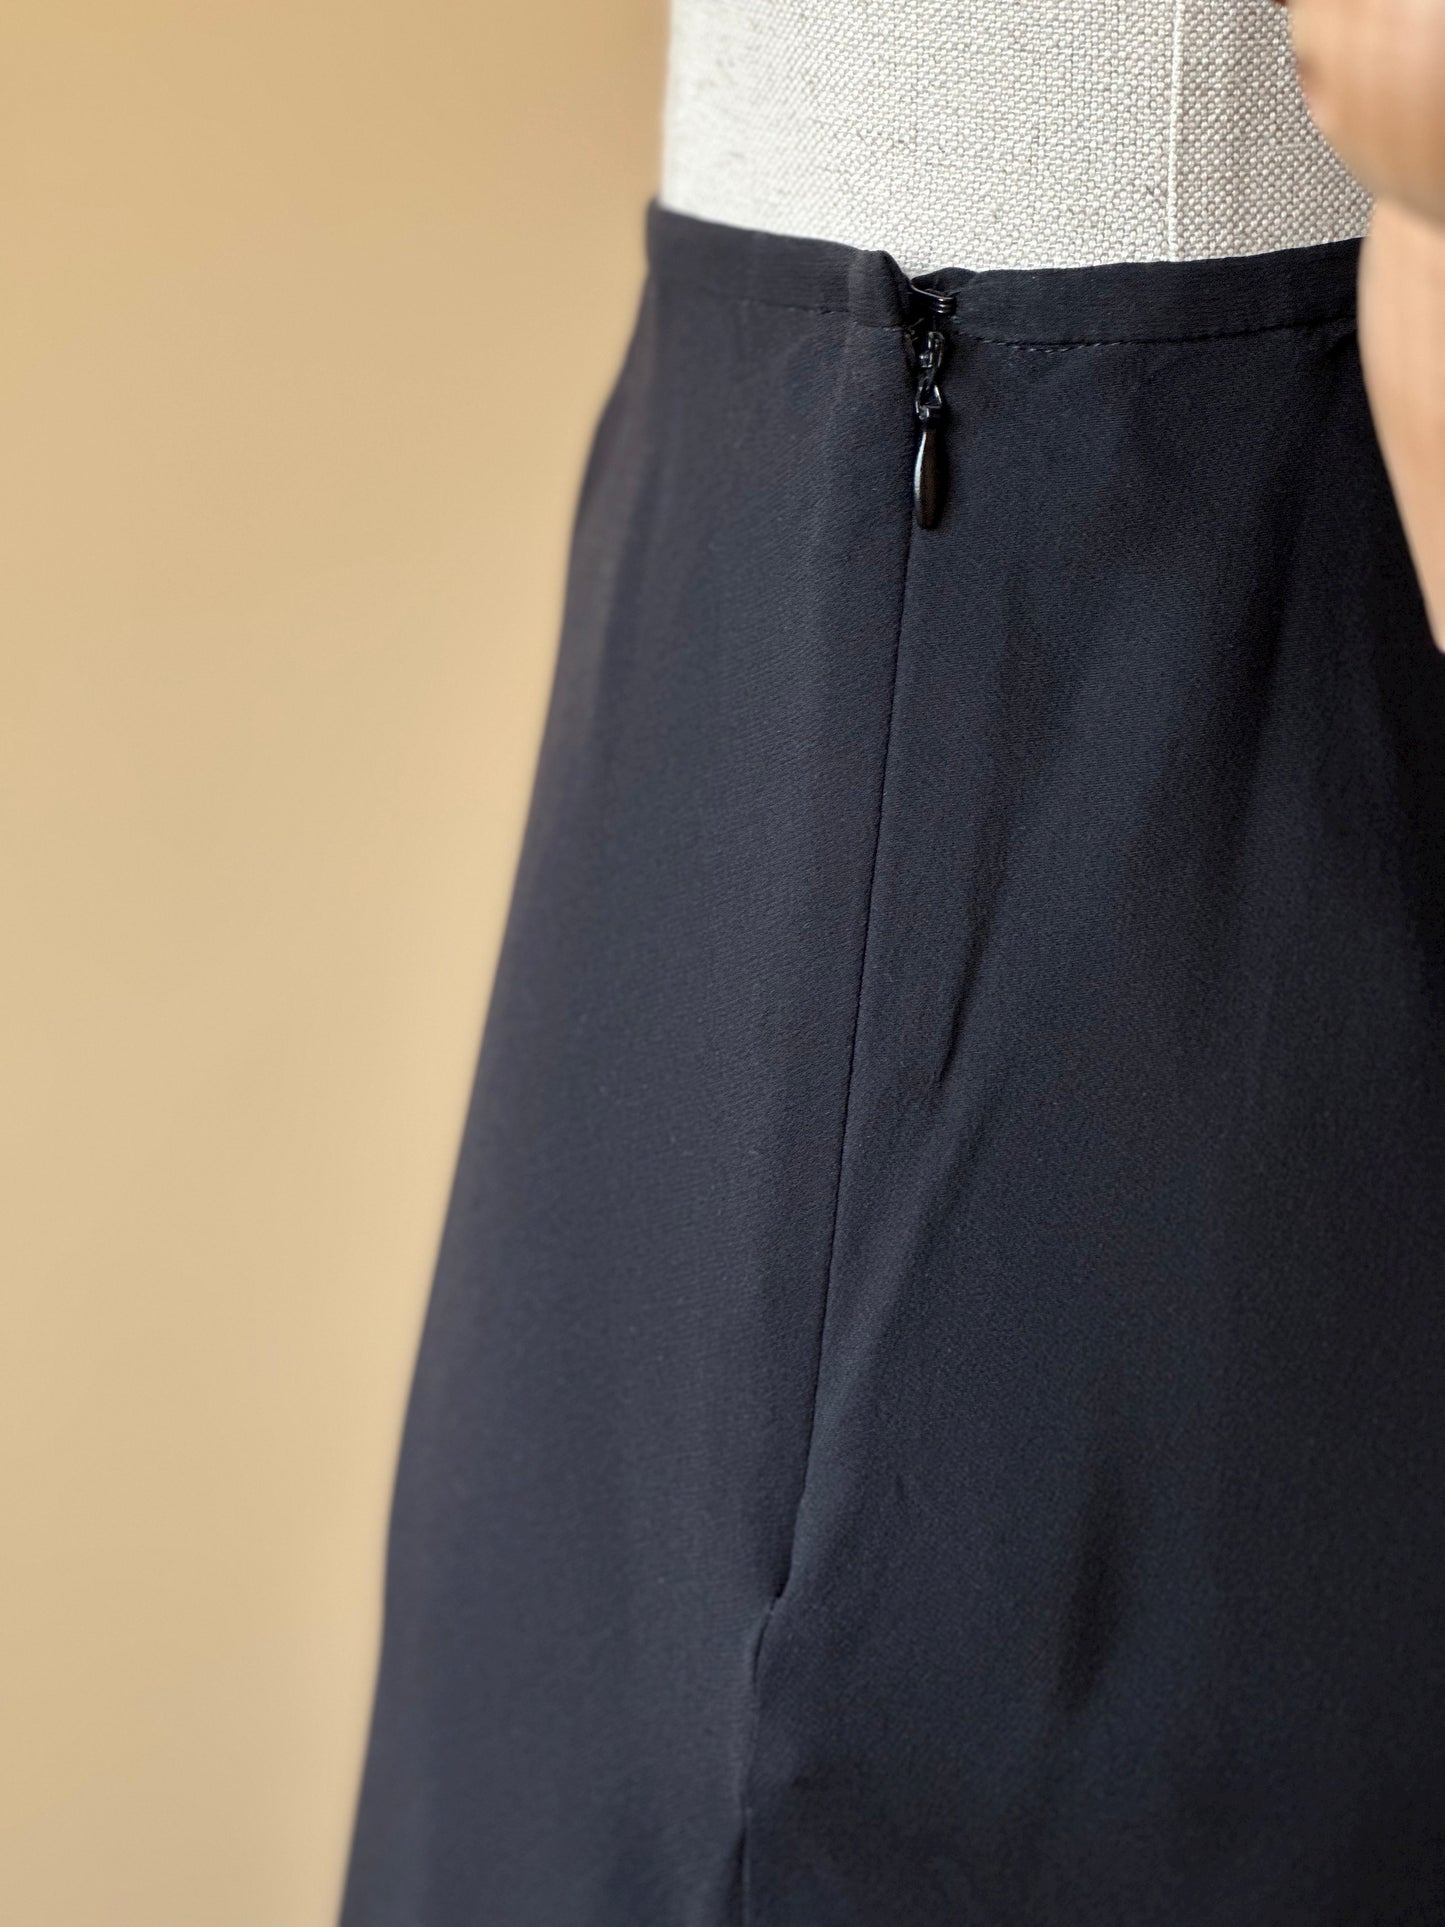 Black Silk Midi Skirt